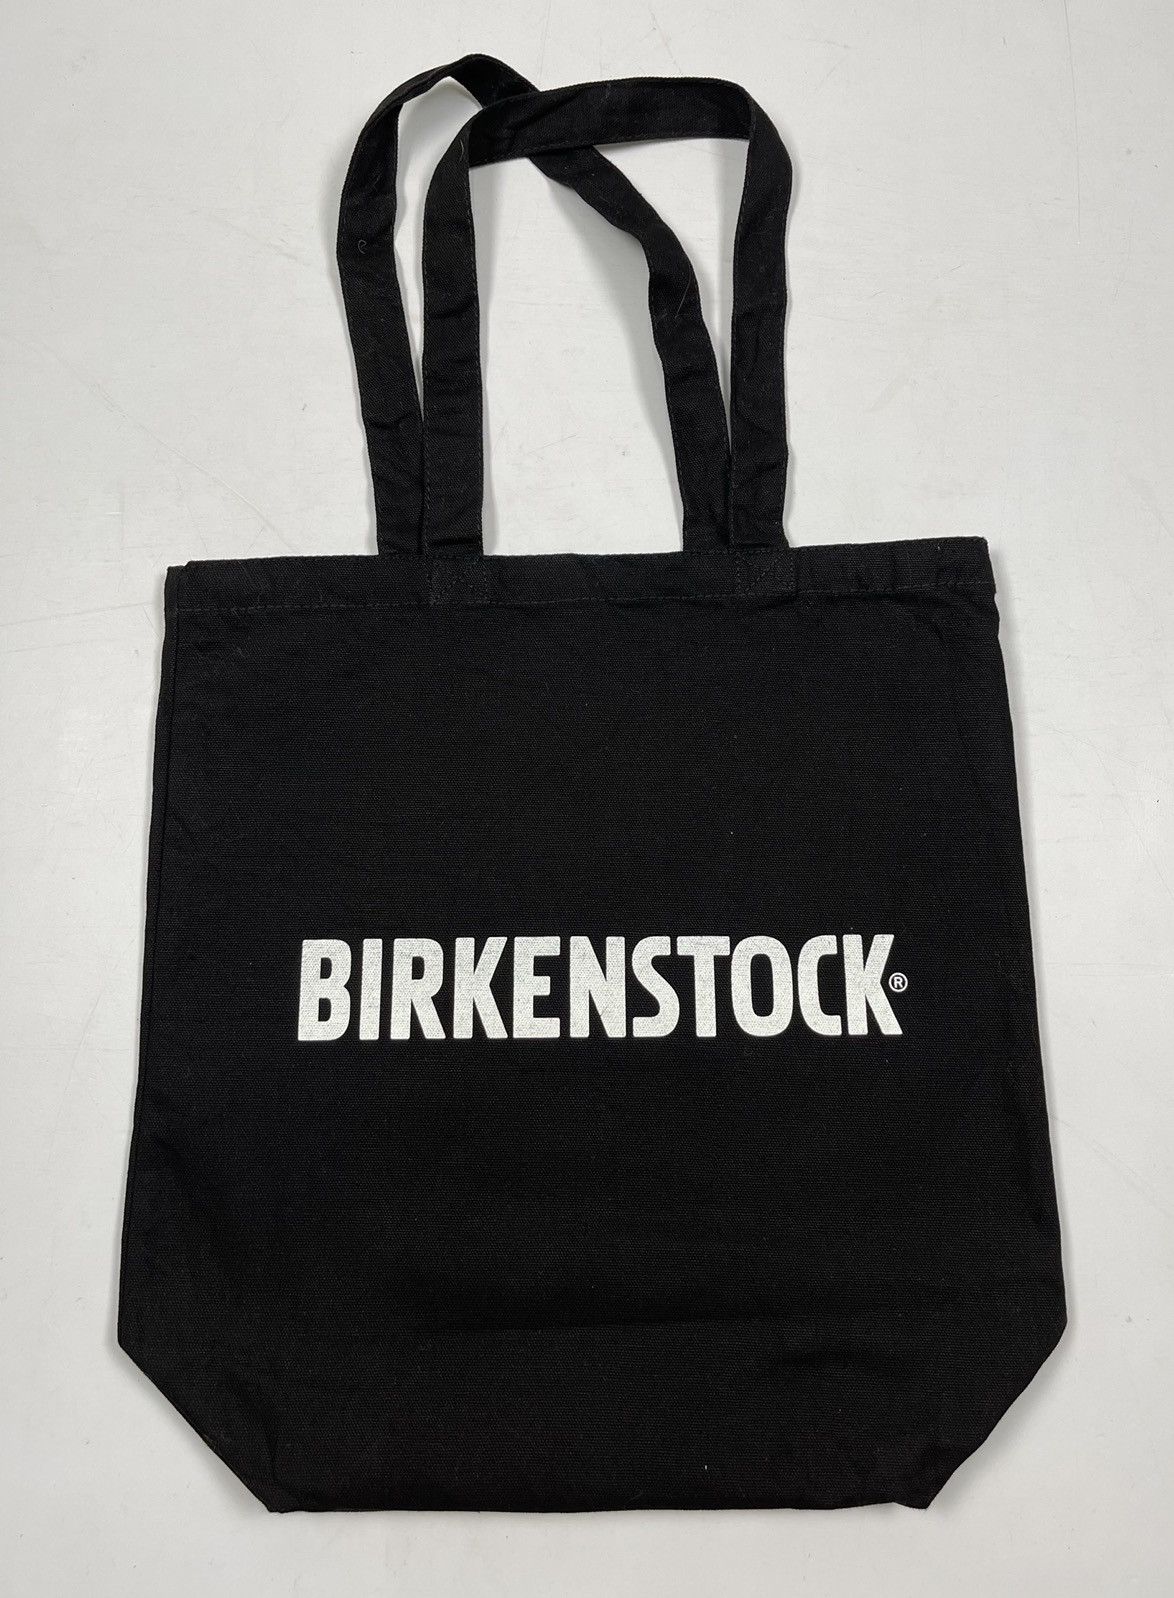 birkenstock tote bag t2 - 2